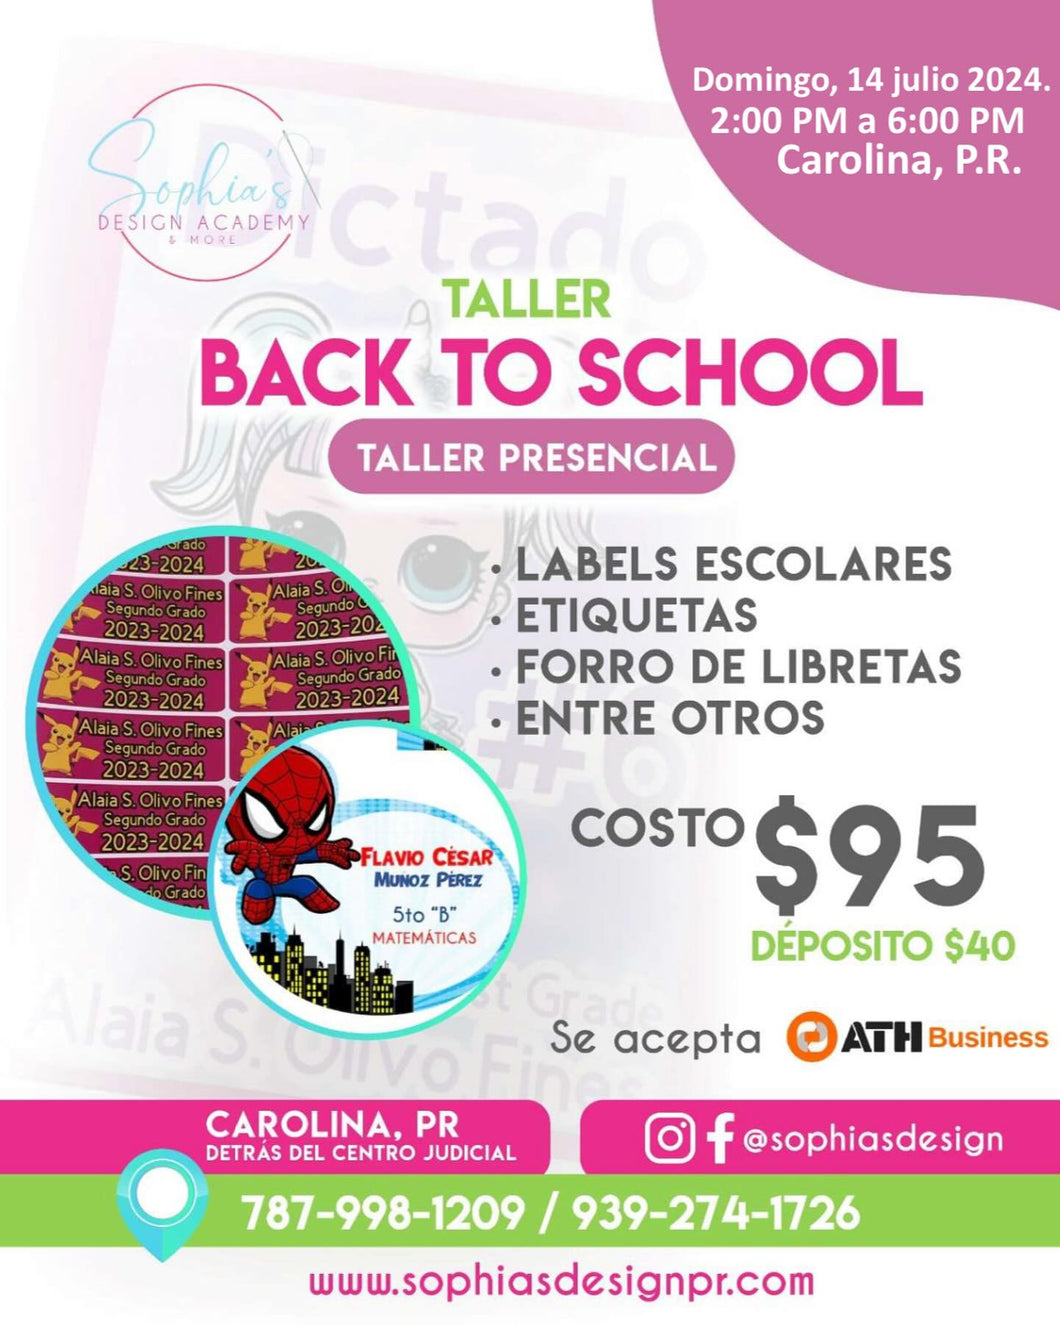 Taller Back to School - Domingo 14 de julio de 2024 (2:00 pm a 6:00 pm)